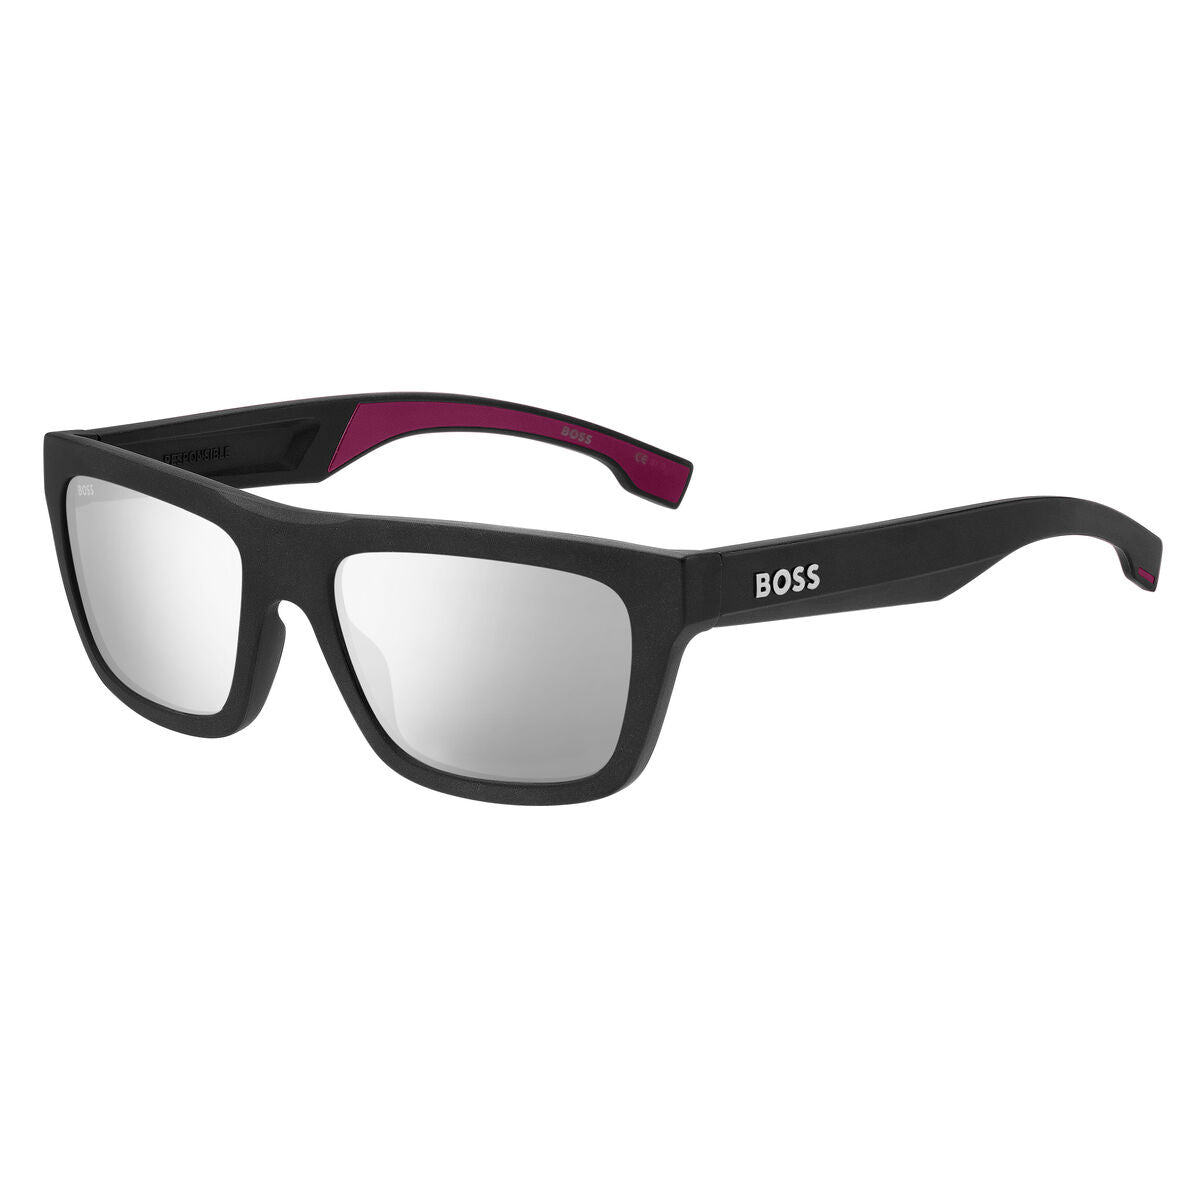 Kaufe Herrensonnenbrille Hugo Boss BOSS-1450-S-DNZ-DC bei AWK Flagship um € 90.00